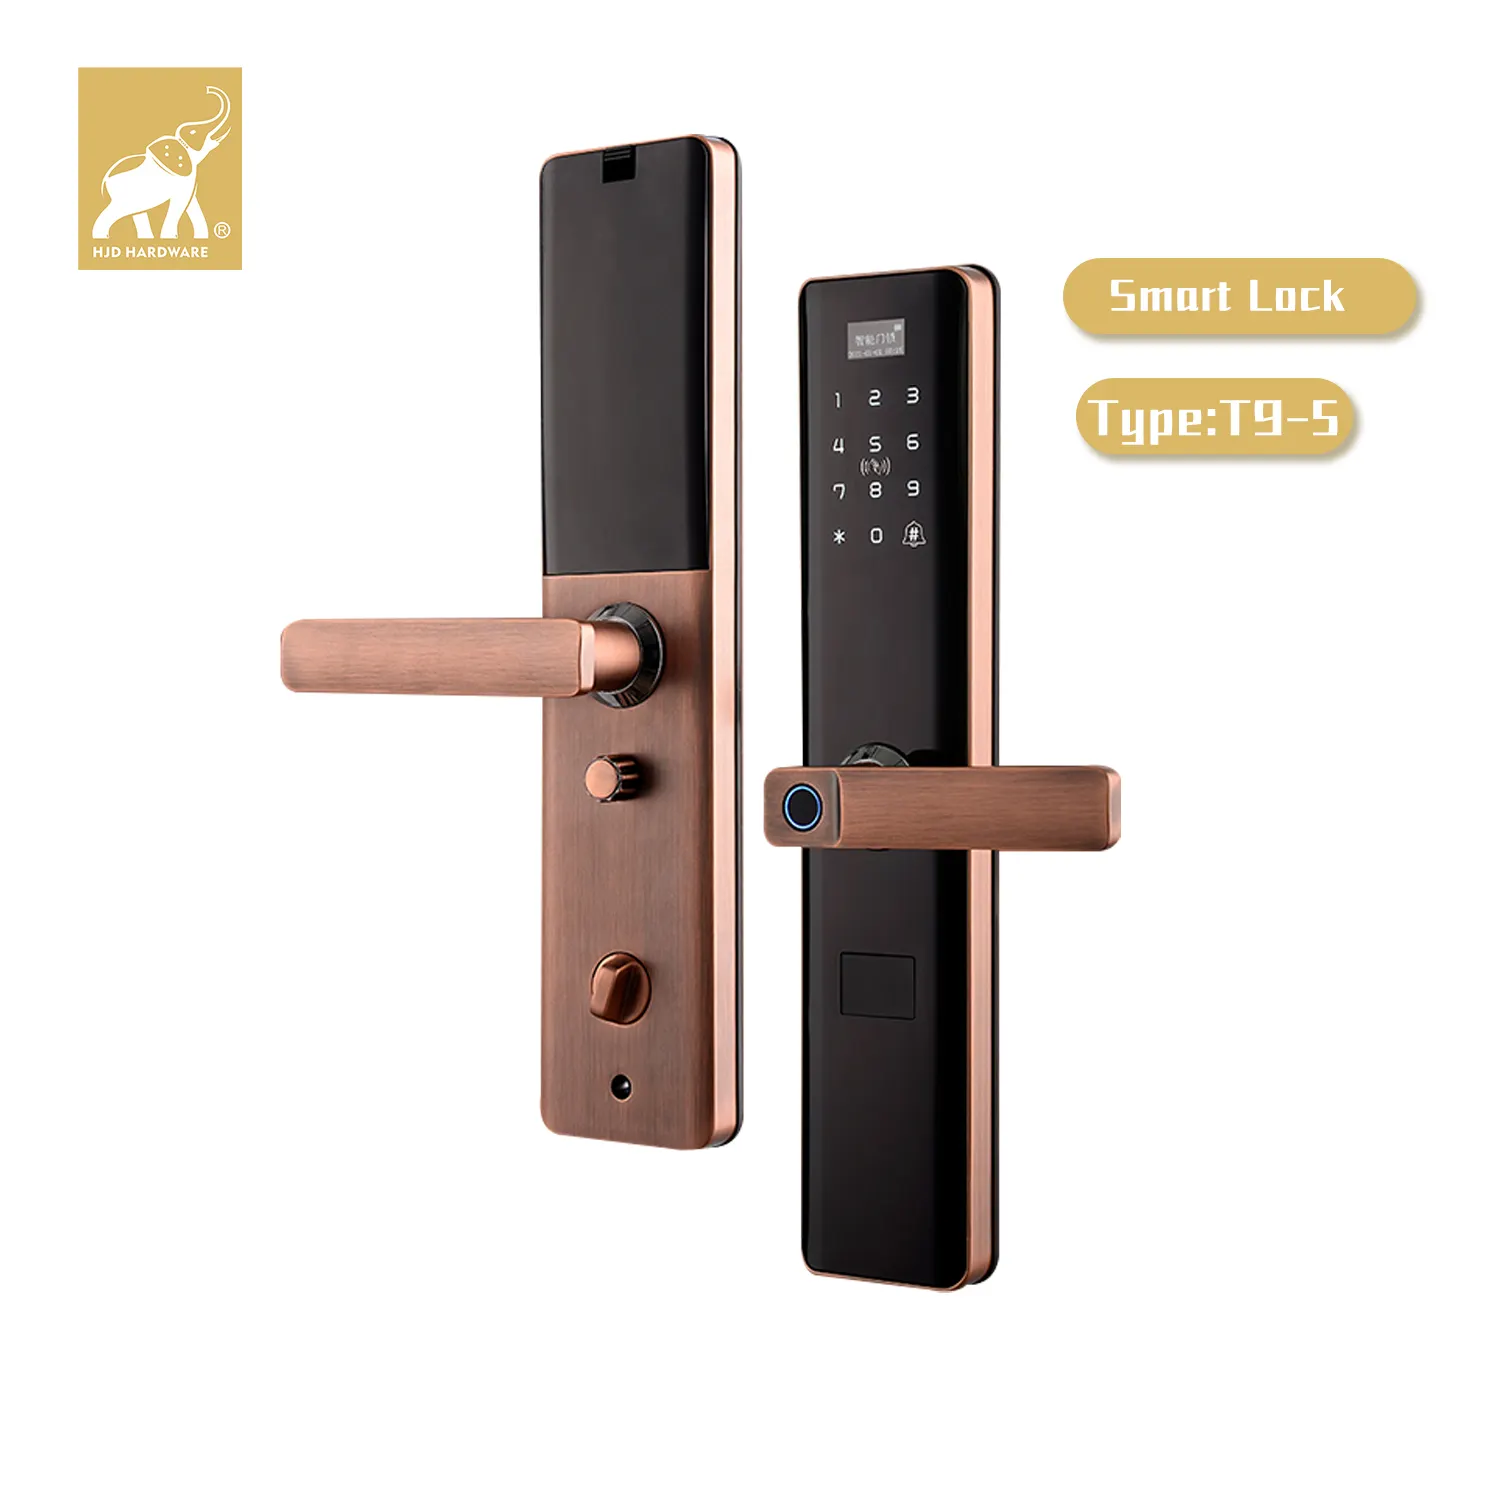 HJD Guangdong produttore nuovo Design serratura intelligente impronta digitale maniglia porta tuya serratura intelligente